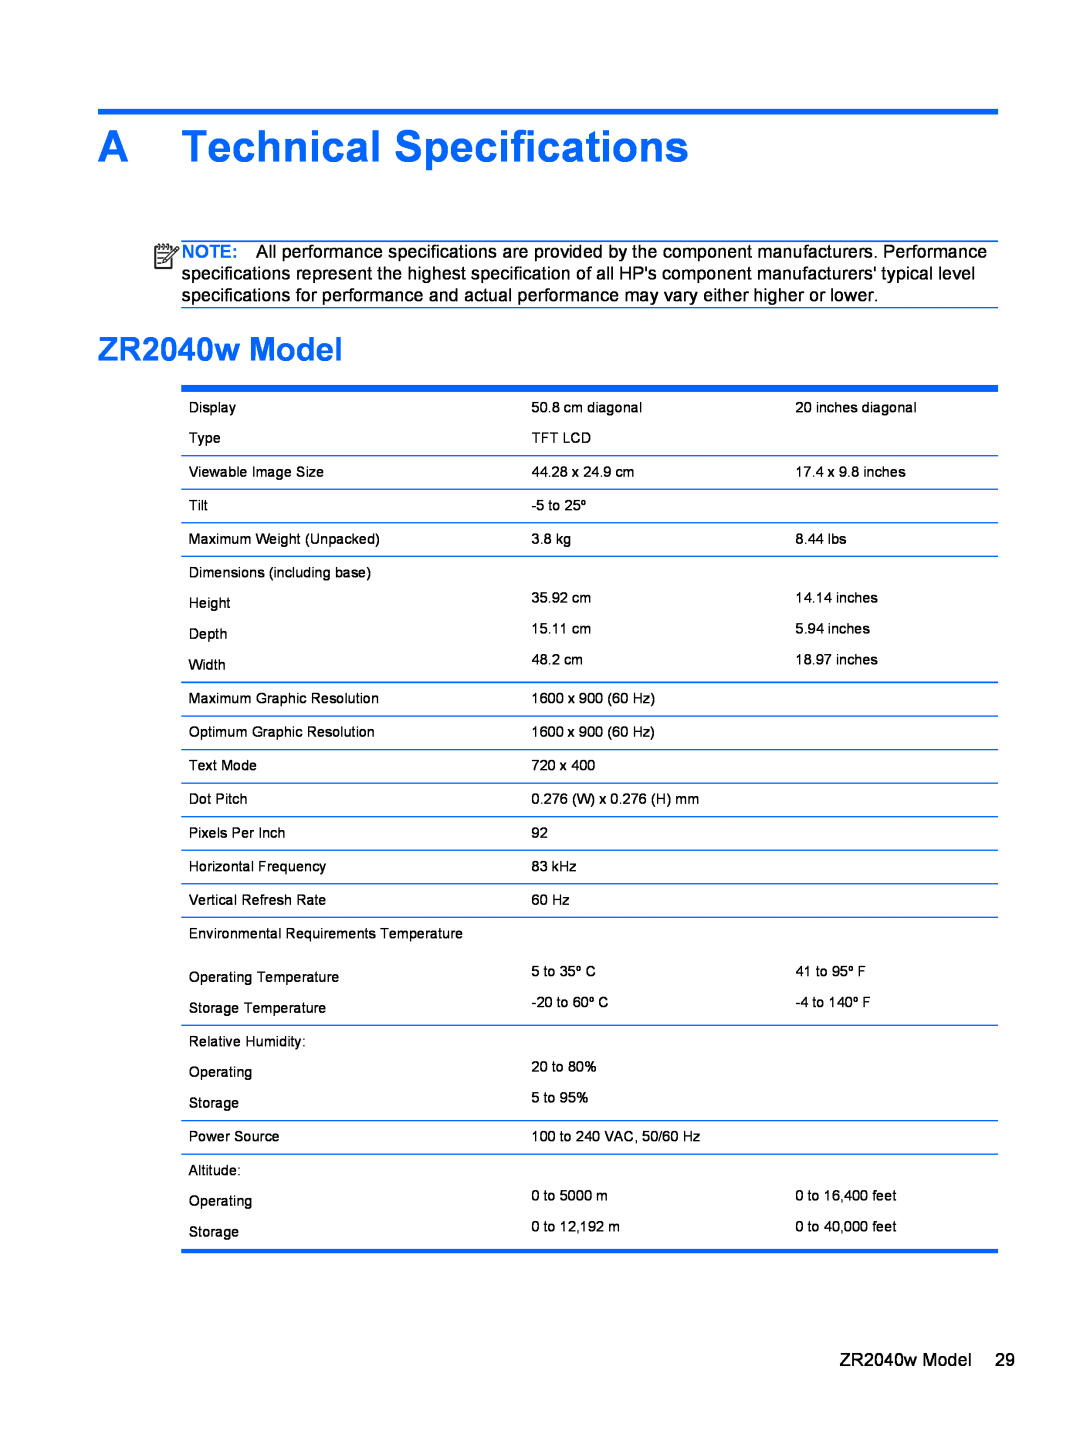 HP ZR2740w 27-inch IPS manual A Technical Specifications, ZR2040w Model 